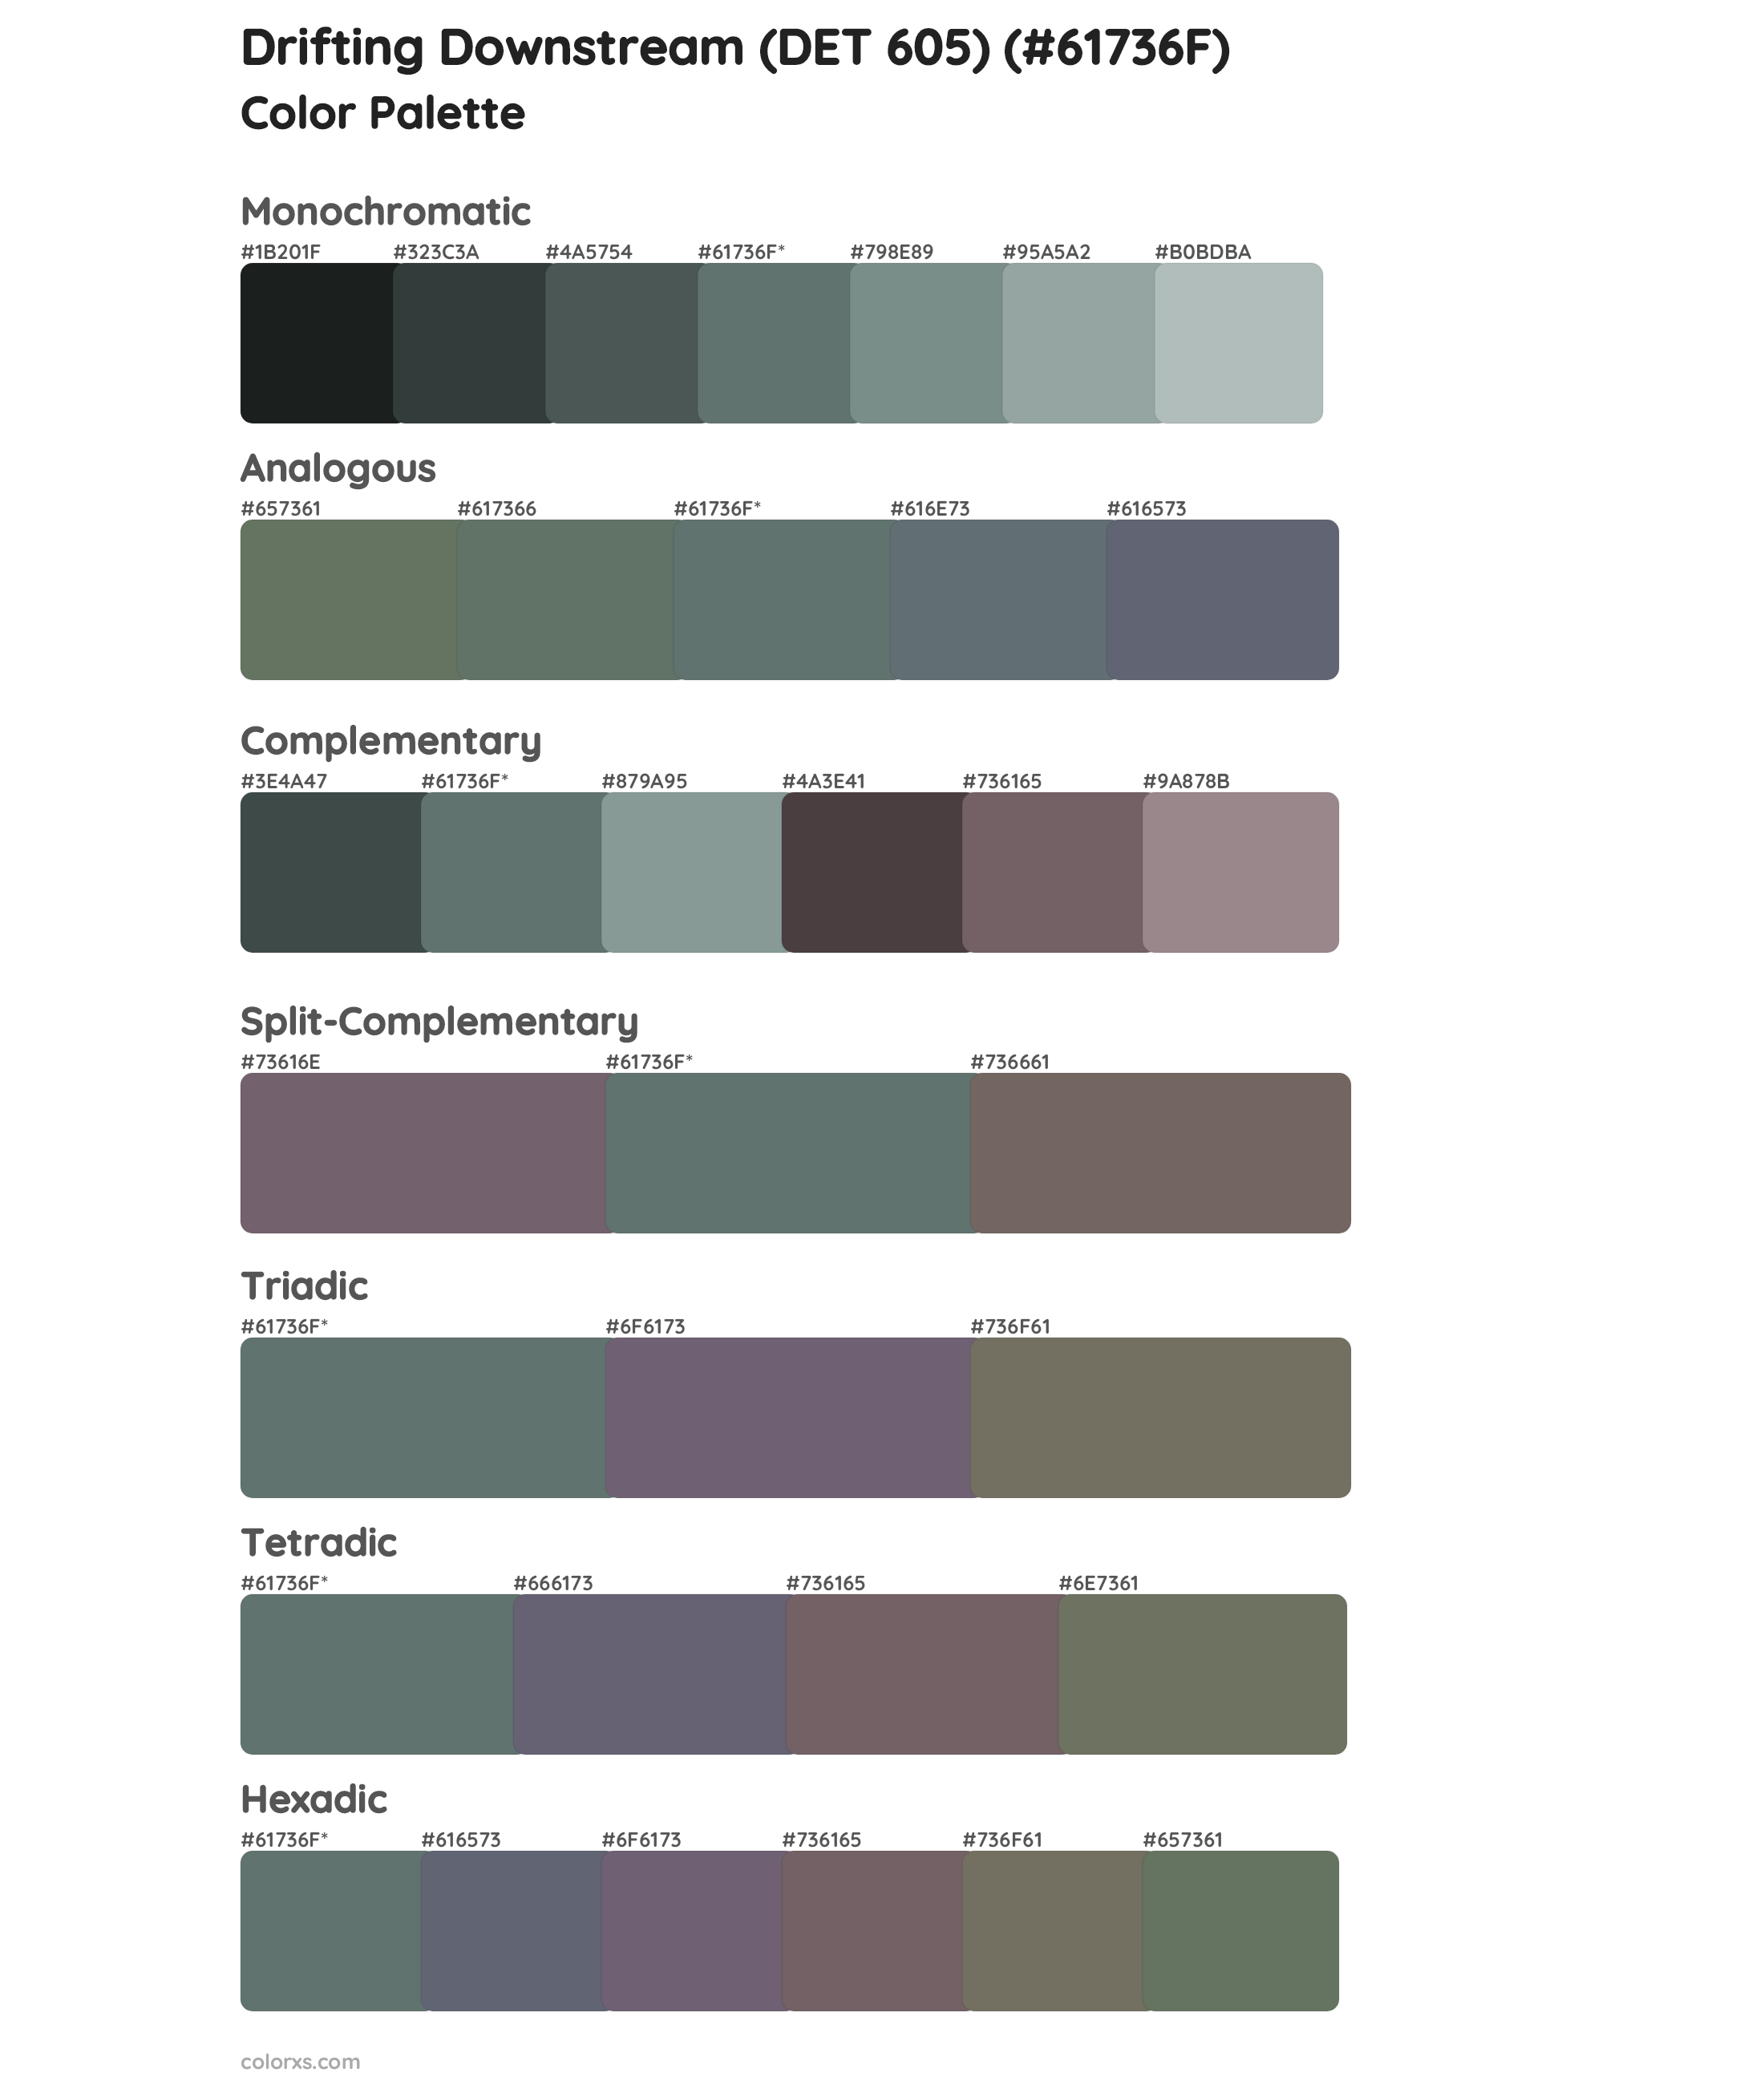 Drifting Downstream (DET 605) Color Scheme Palettes